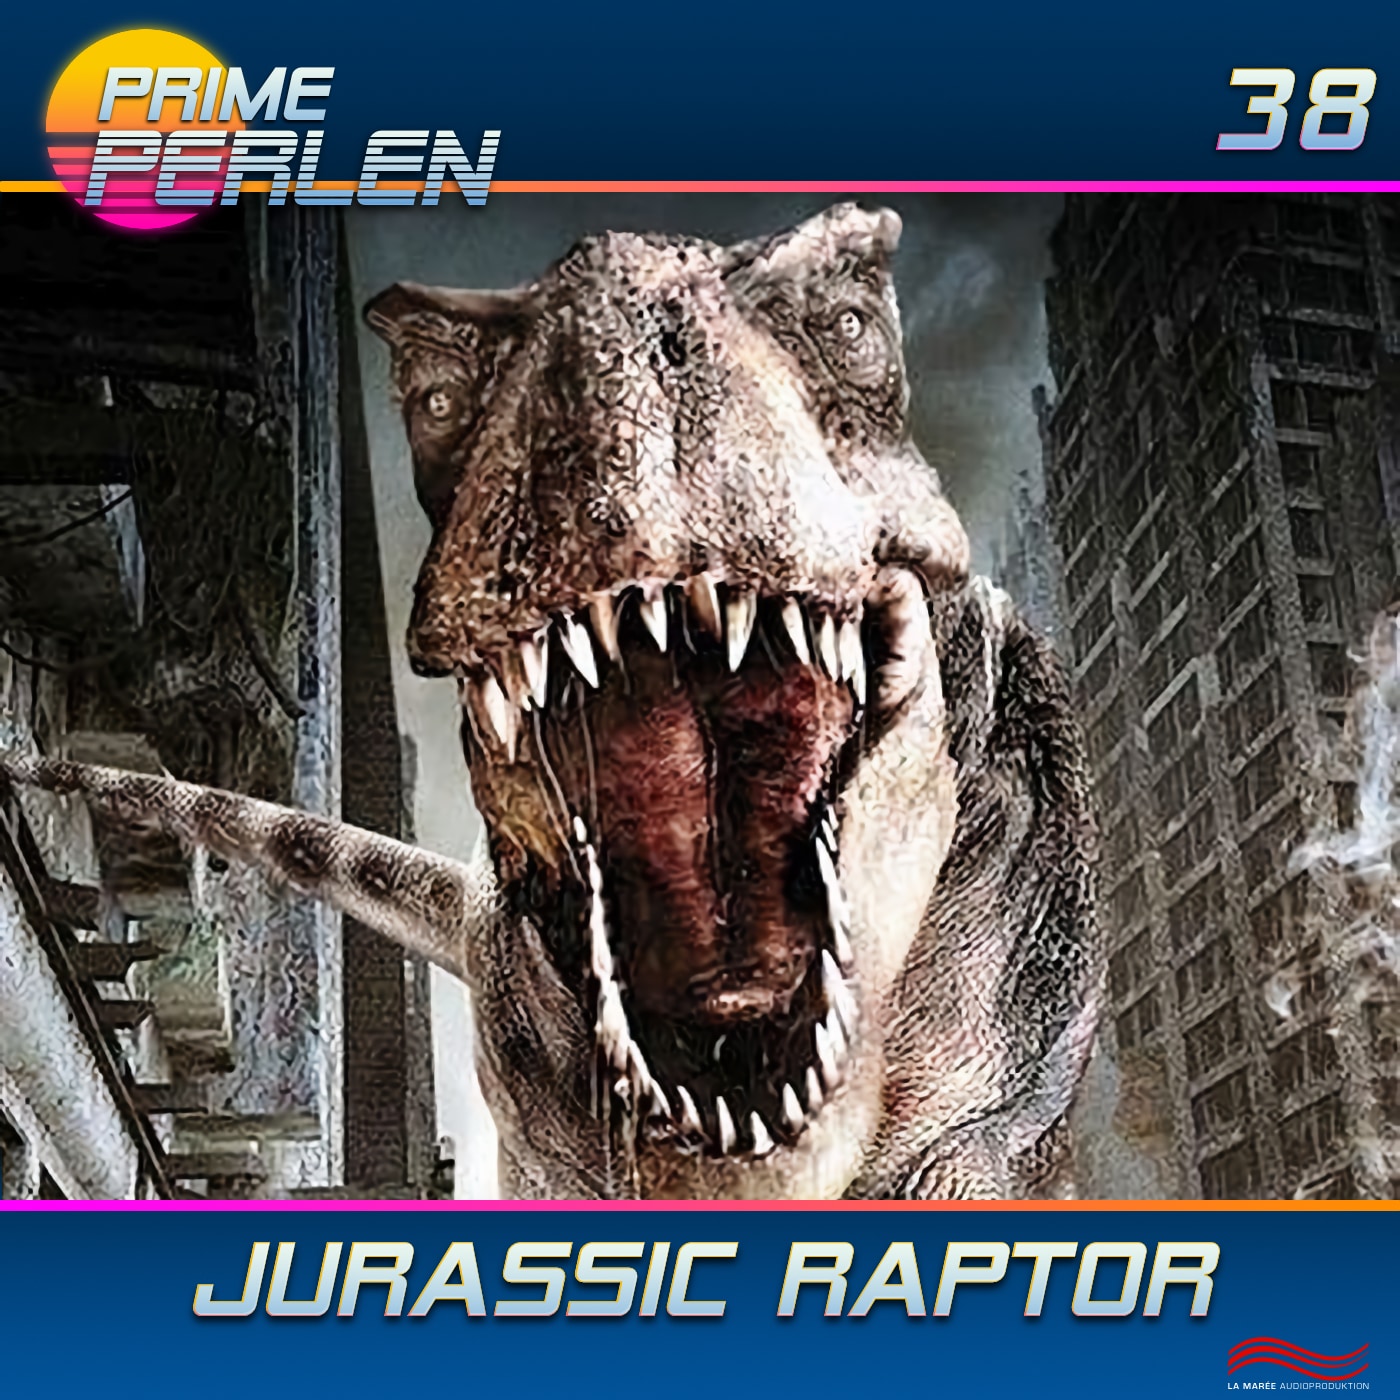 Prime Perlen #38 – Jurassic Raptor